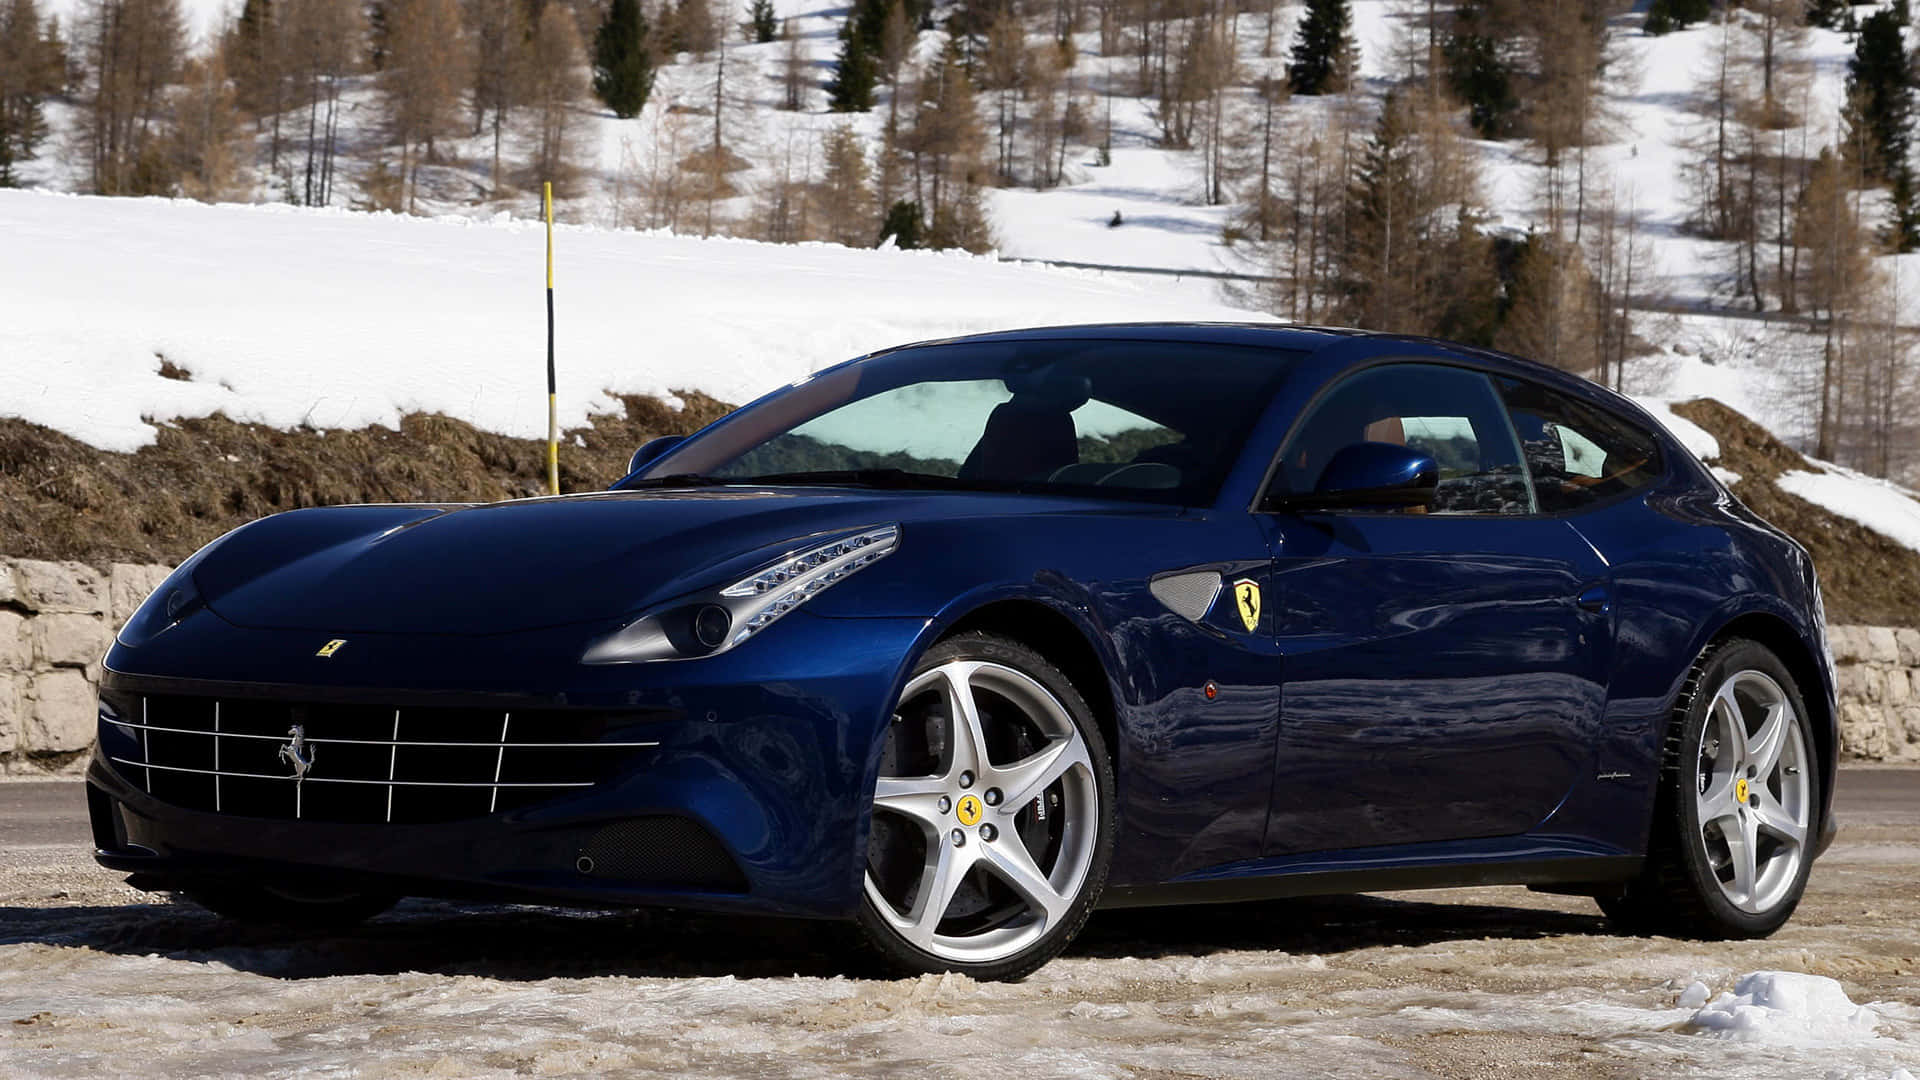 Stunning Ferrari FF showcasing its power and elegance Wallpaper